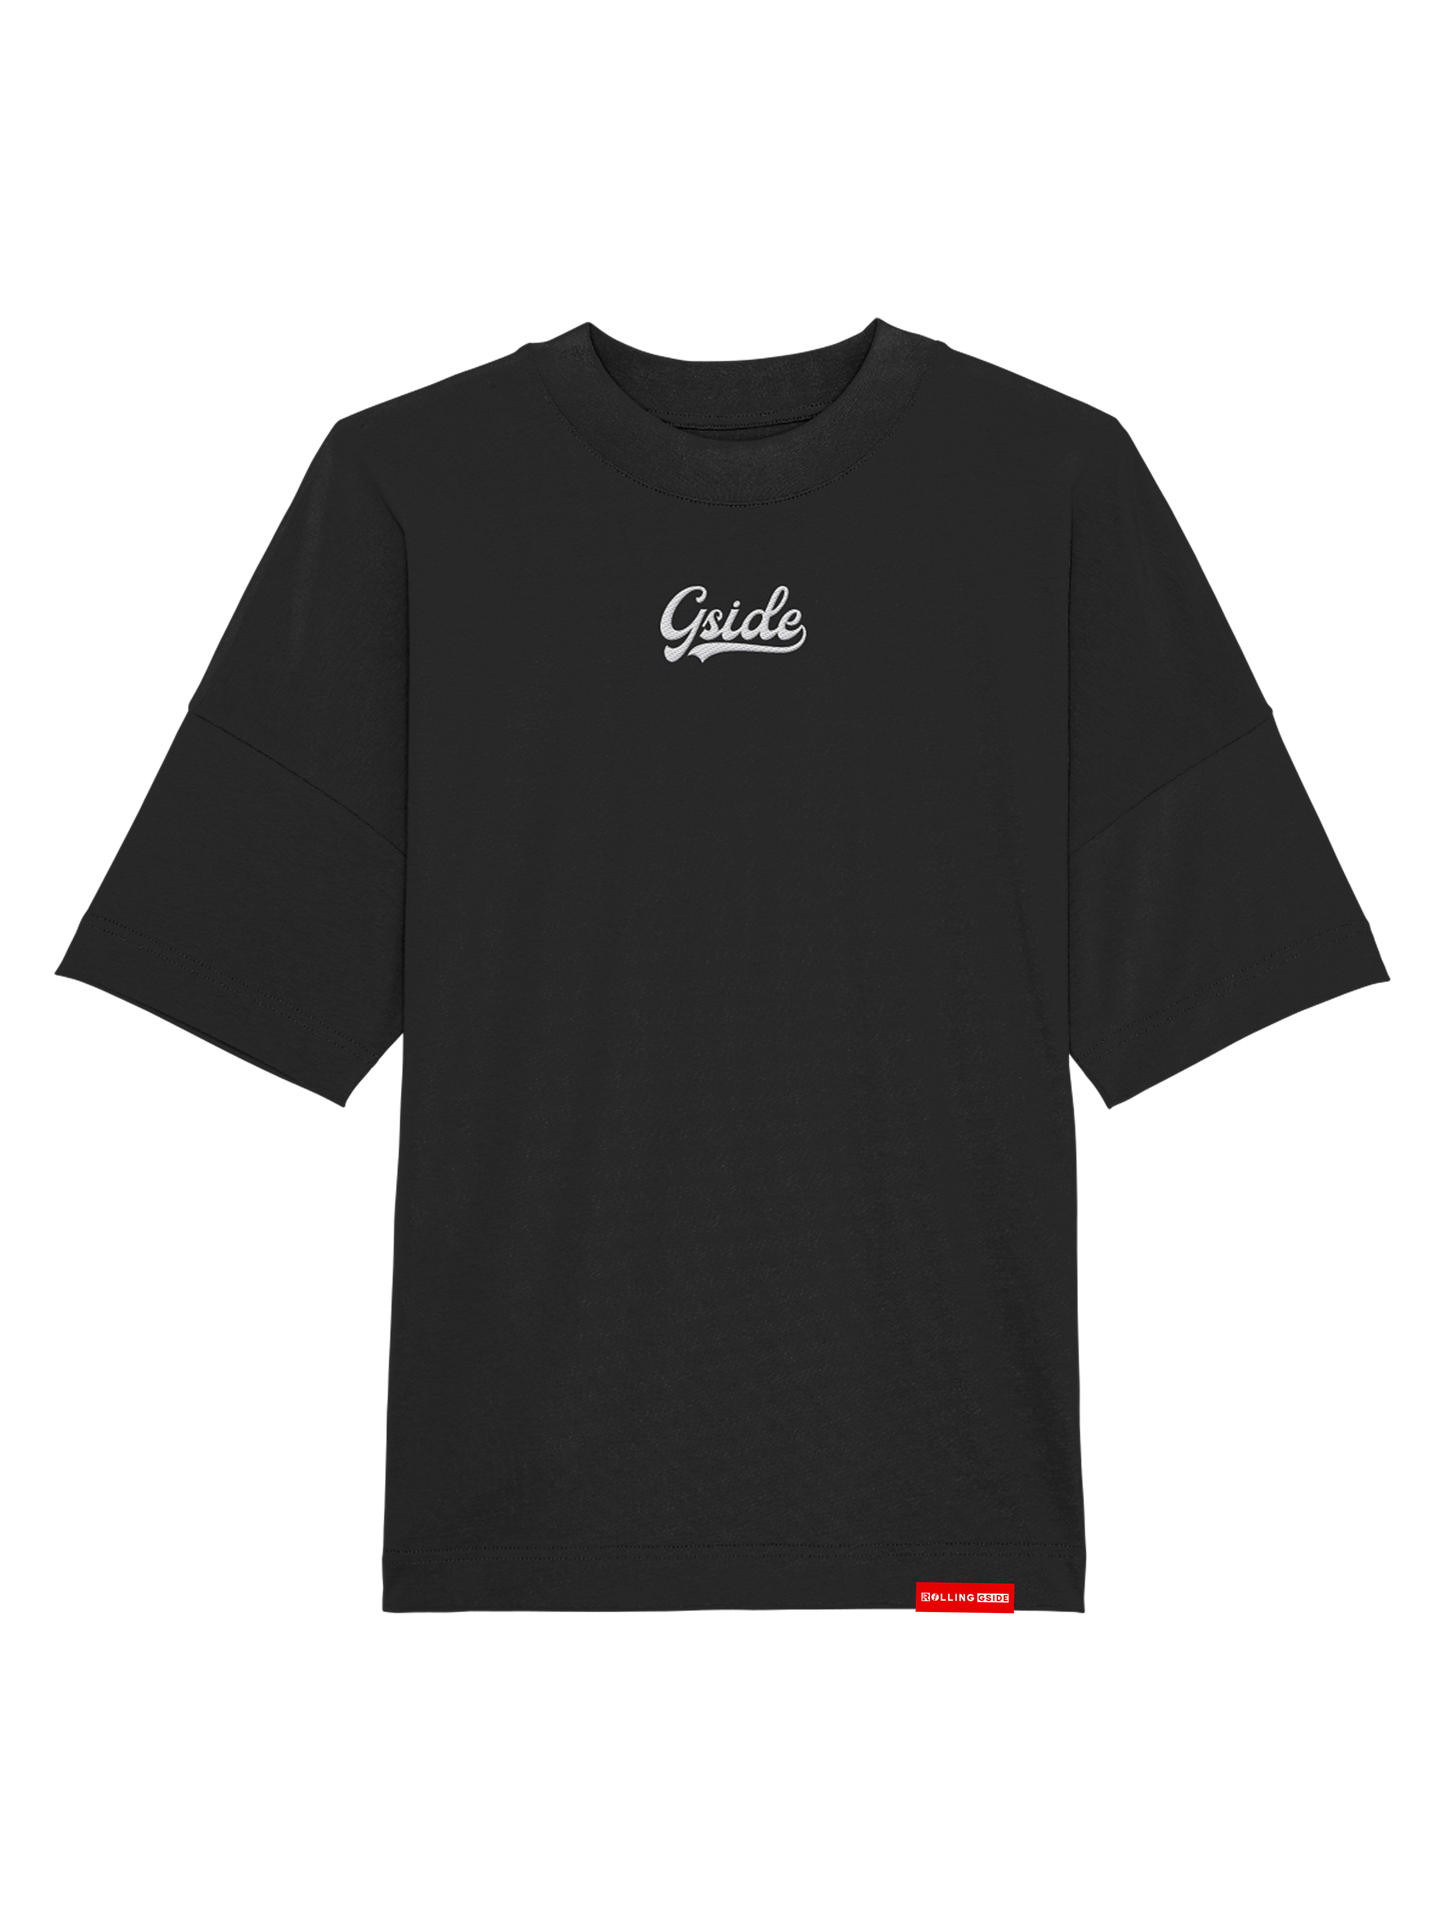 Gside Embroidered Oversize T-Shirt - Black/White